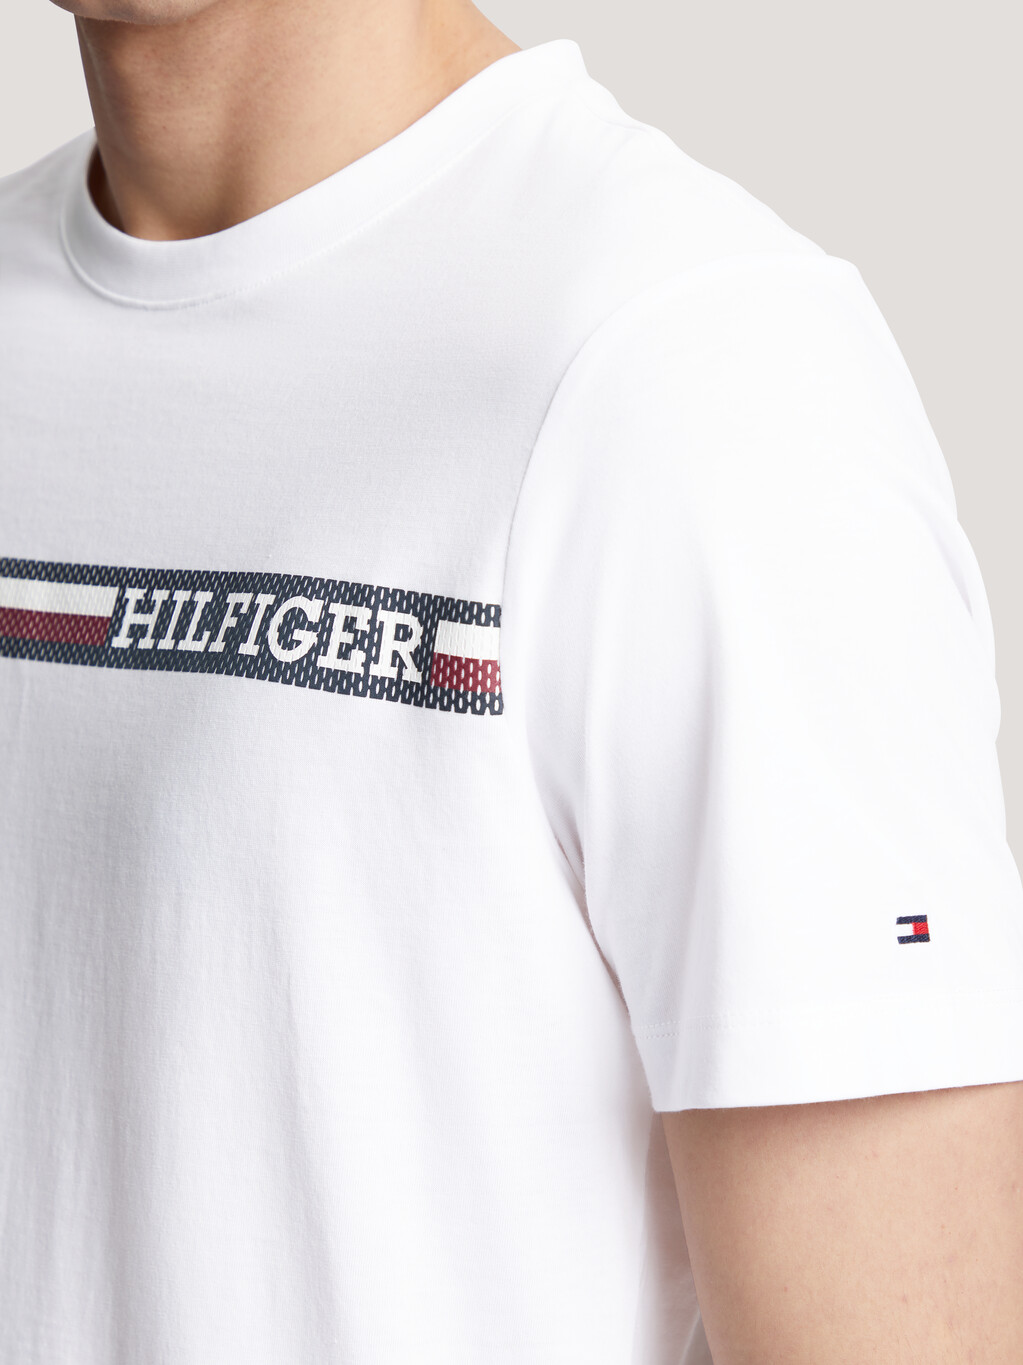 Hilfiger Monotype Signature Tape Jersey T-Shirt, White, hi-res